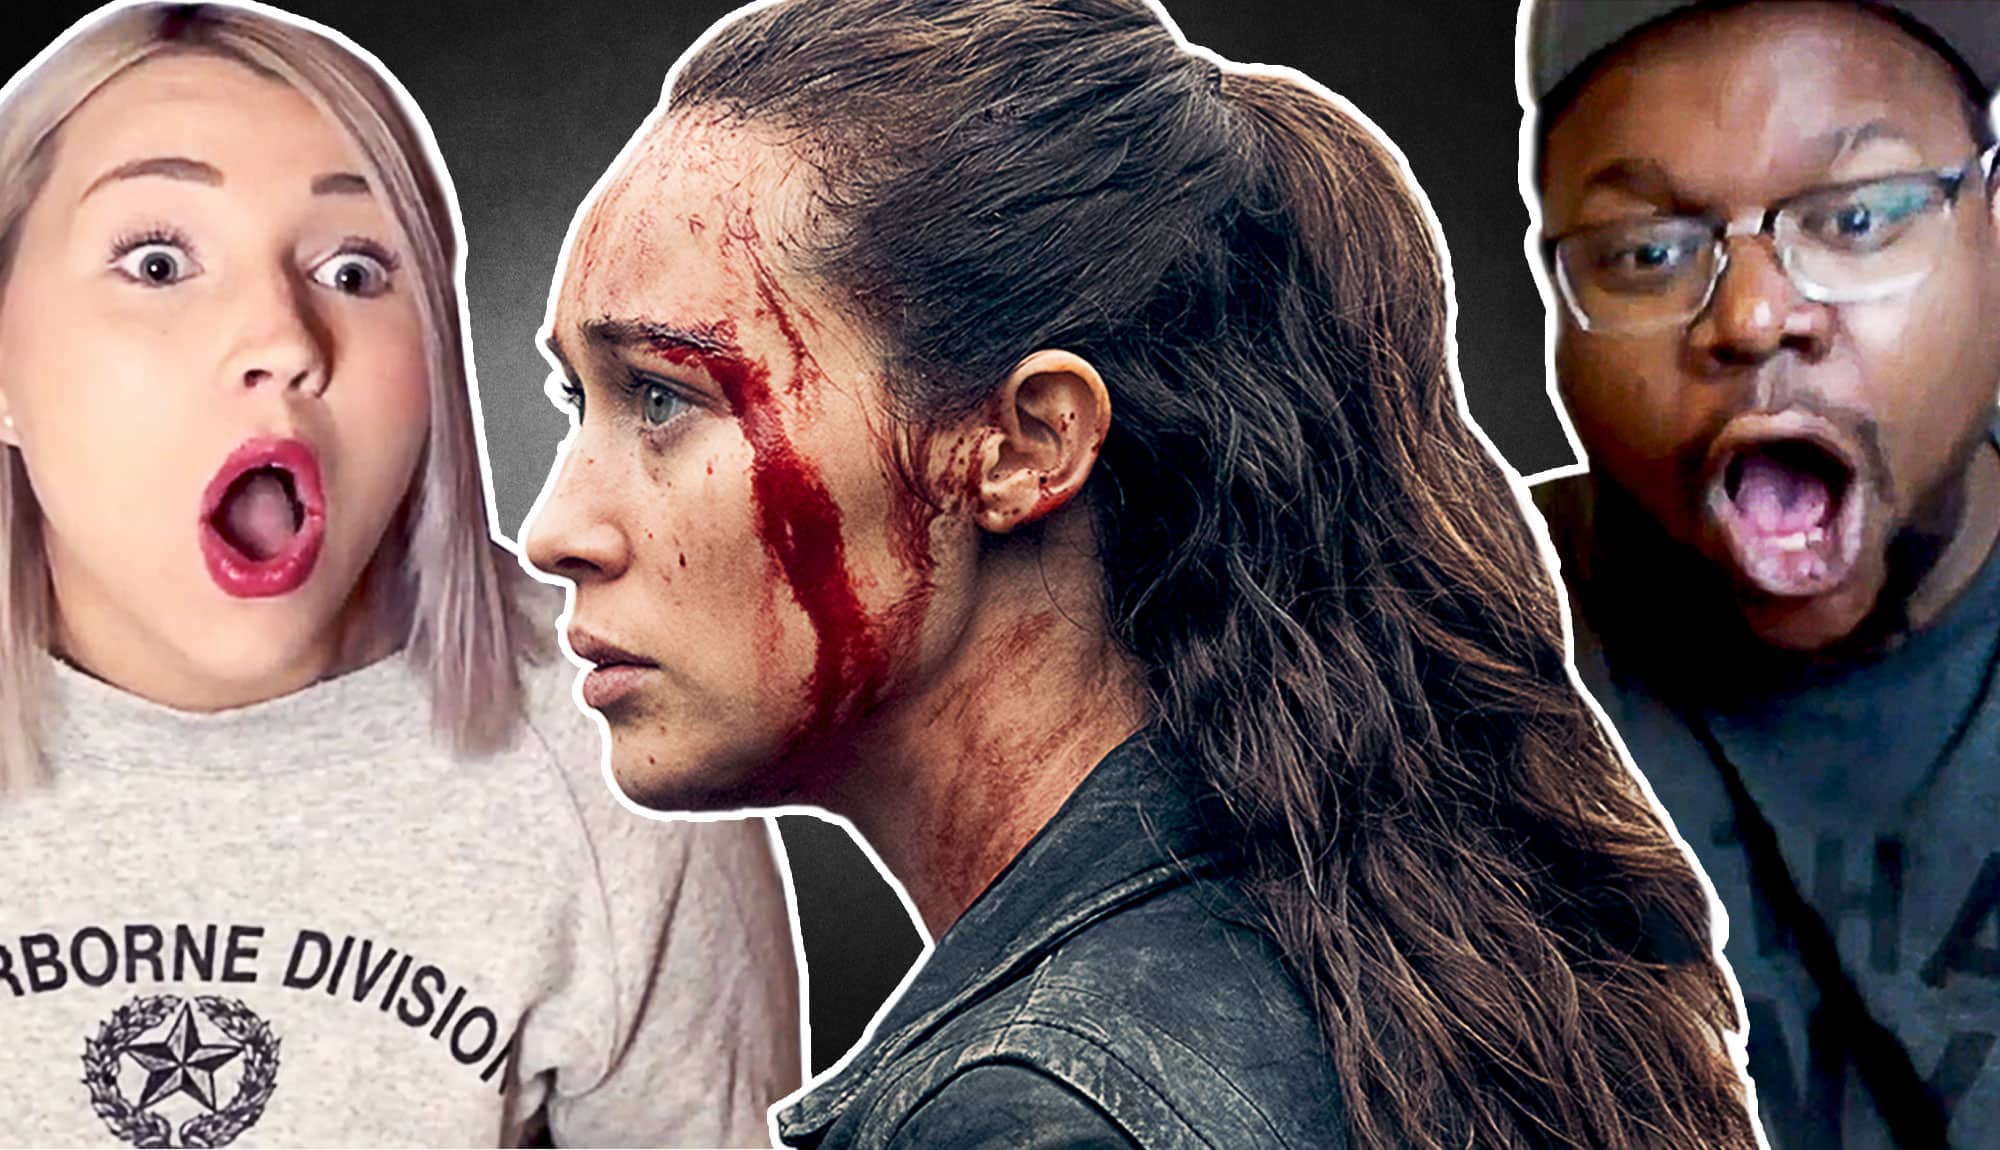 Fans React to Fear the Walking Dead Season 5 Episode 1: “Here to Help”